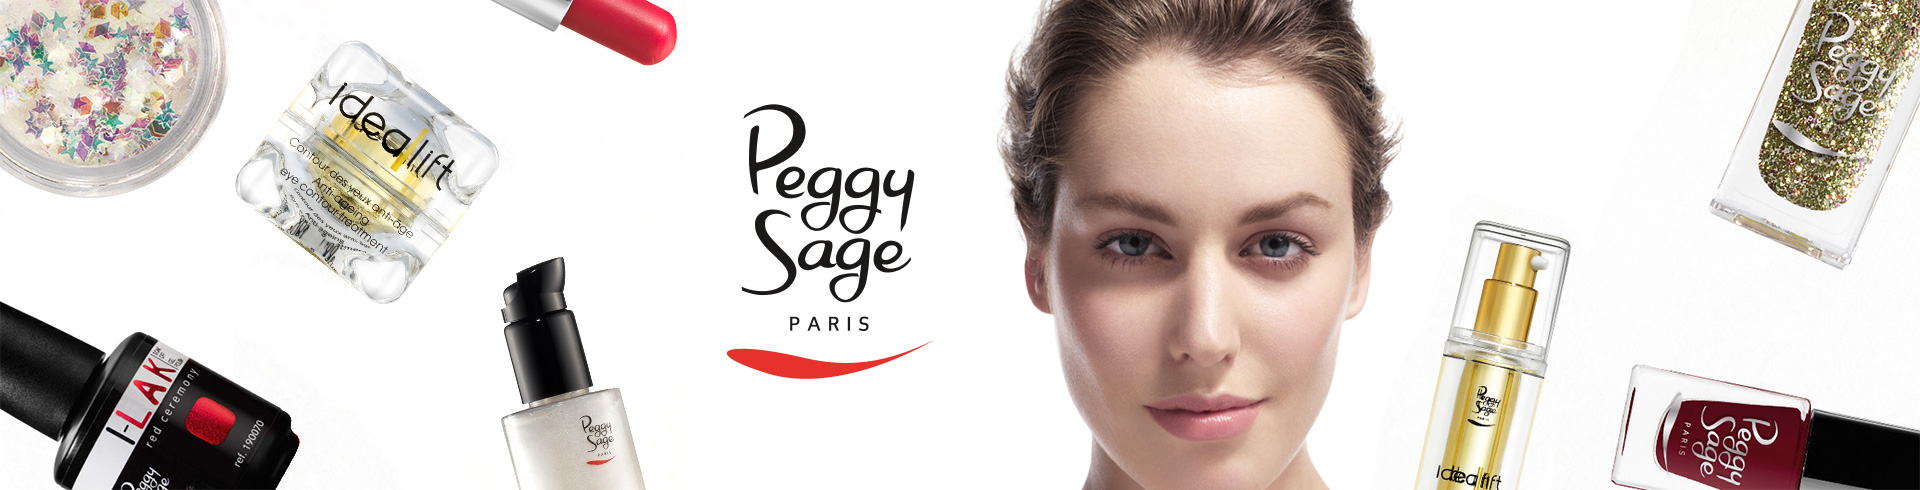 Peggy Sage προϊόντα μακιγιάζ και νυχιών Le Tif Hair and Nails